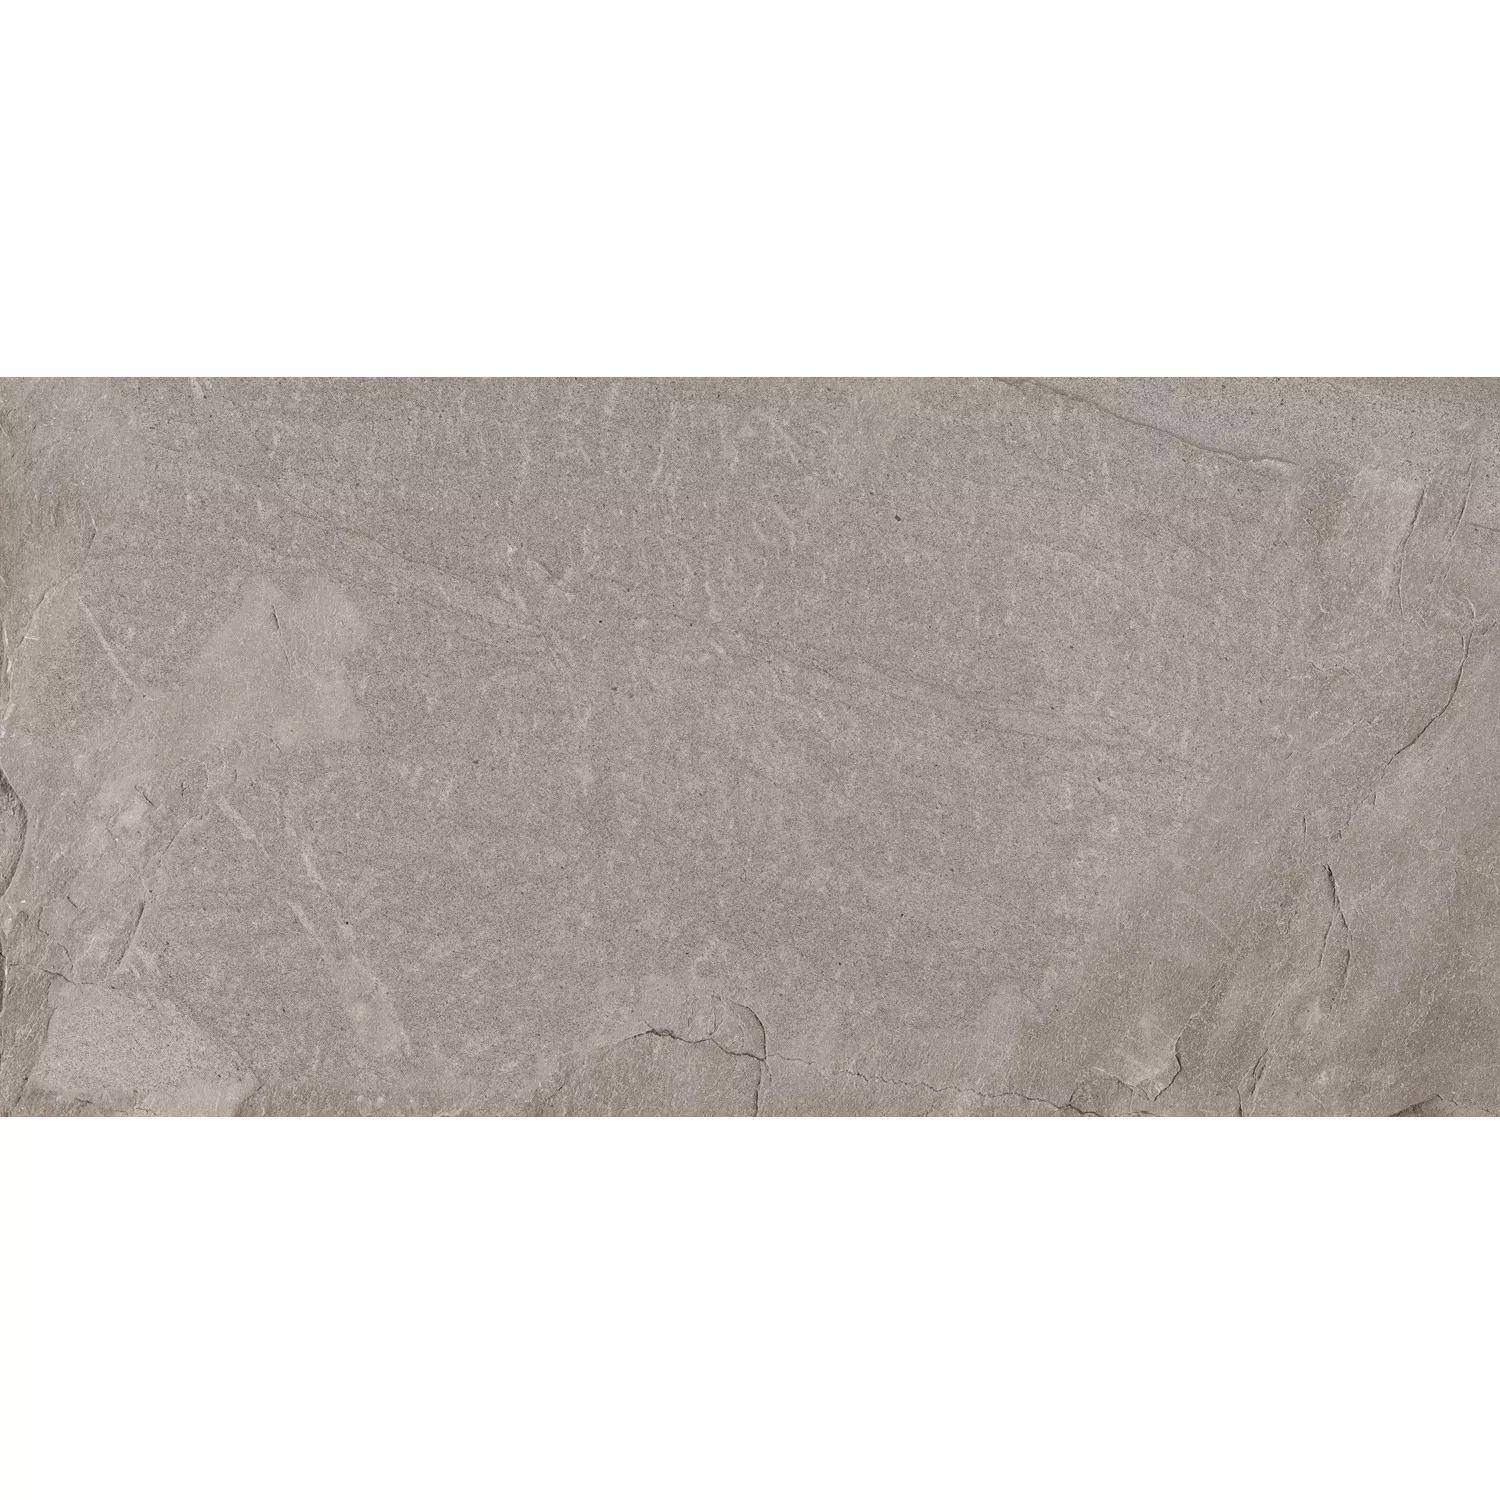 Sample Floor Tiles Homeland Natural Stone Optic R10 Grey 30x60cm